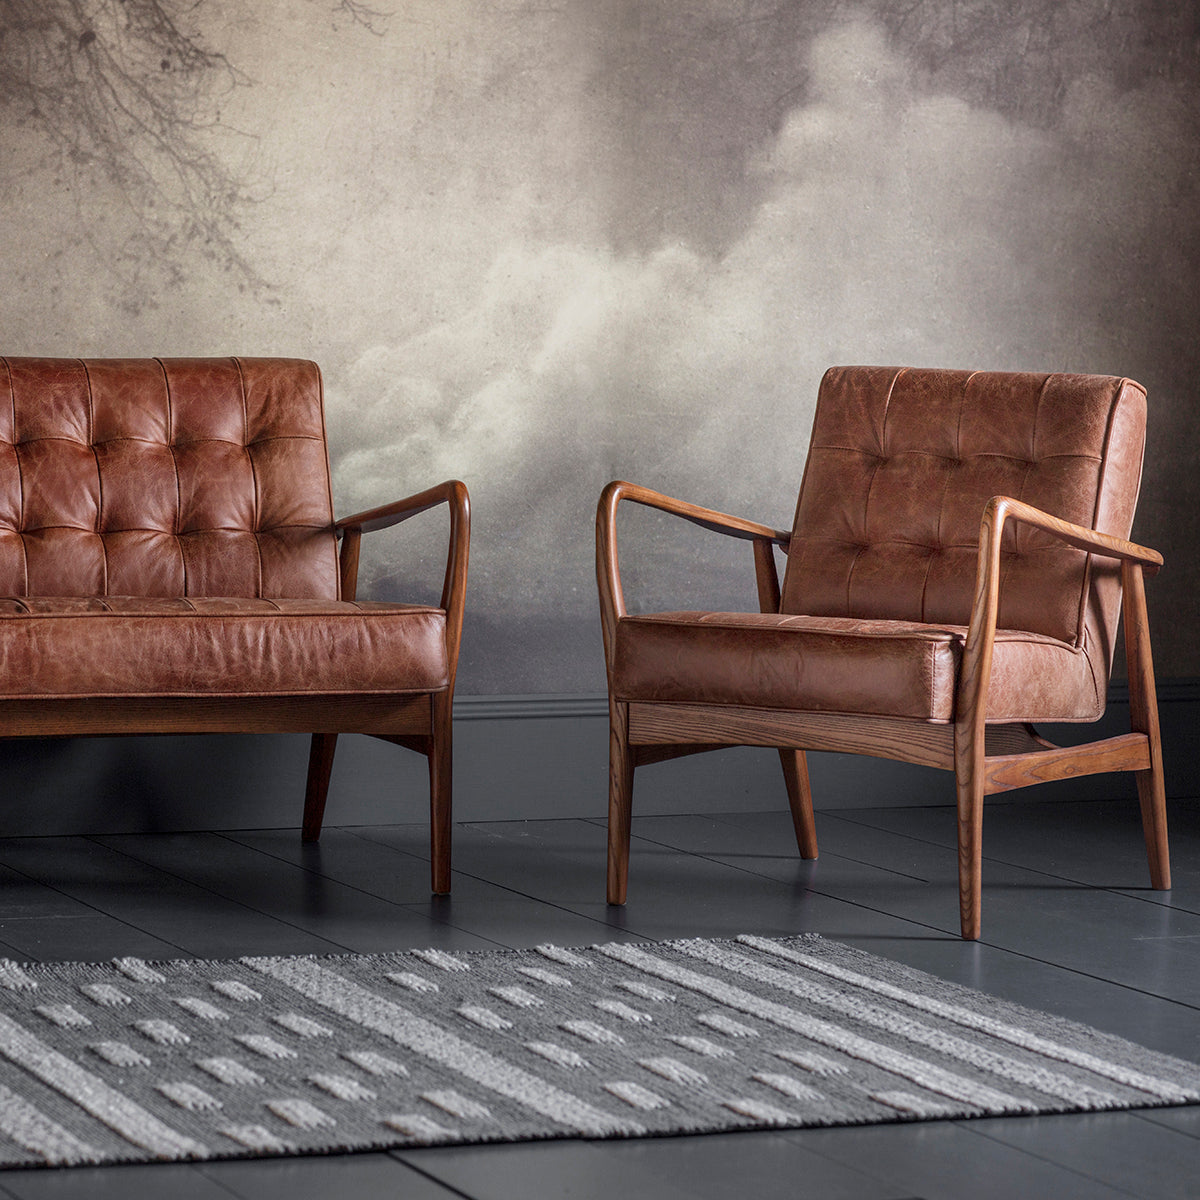 Ronson 2 seat mid-century sofa in vintage brown leather upholstery | MalletandPlane.com